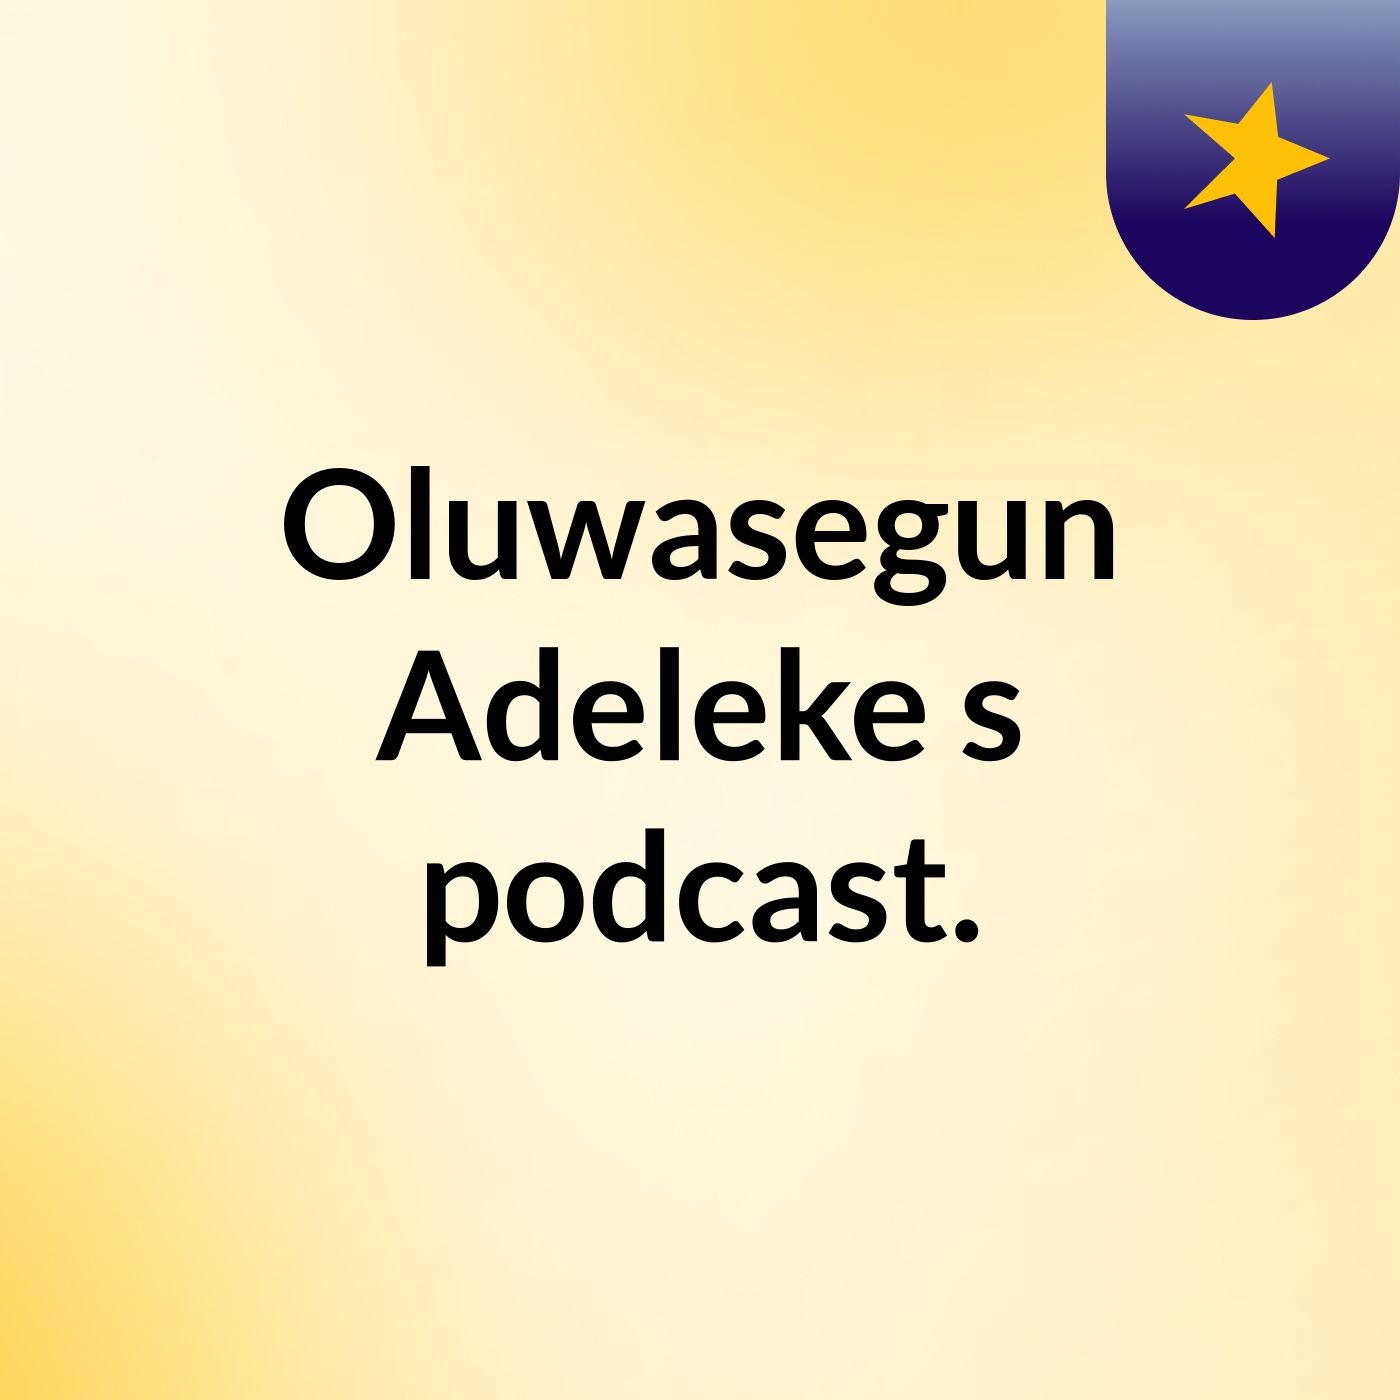 Oluwasegun Adeleke's podcast.